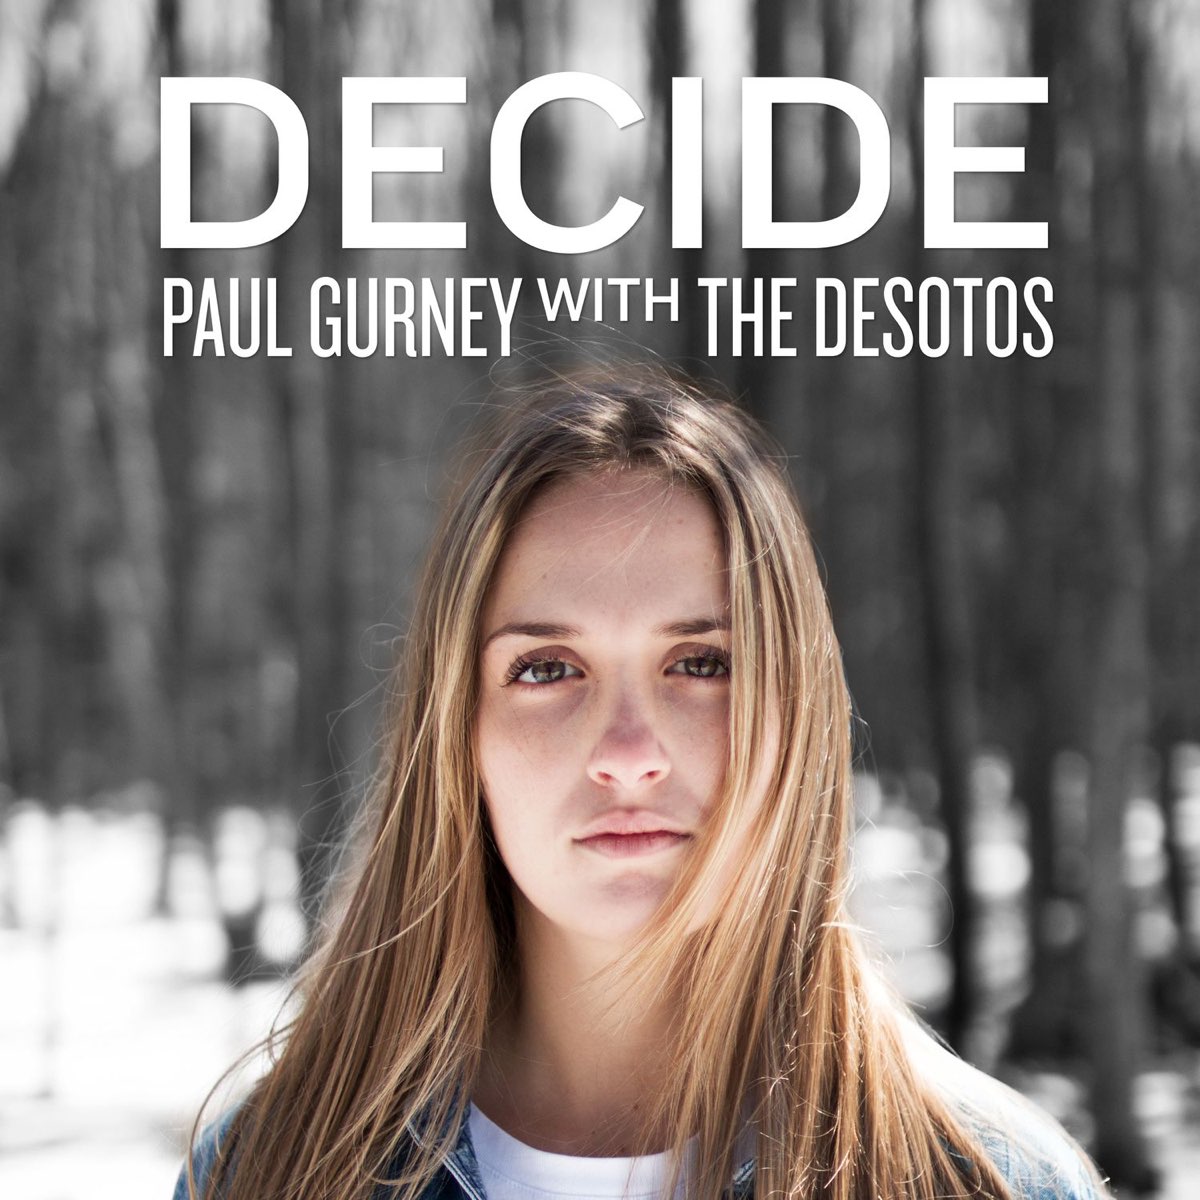 Paul decide